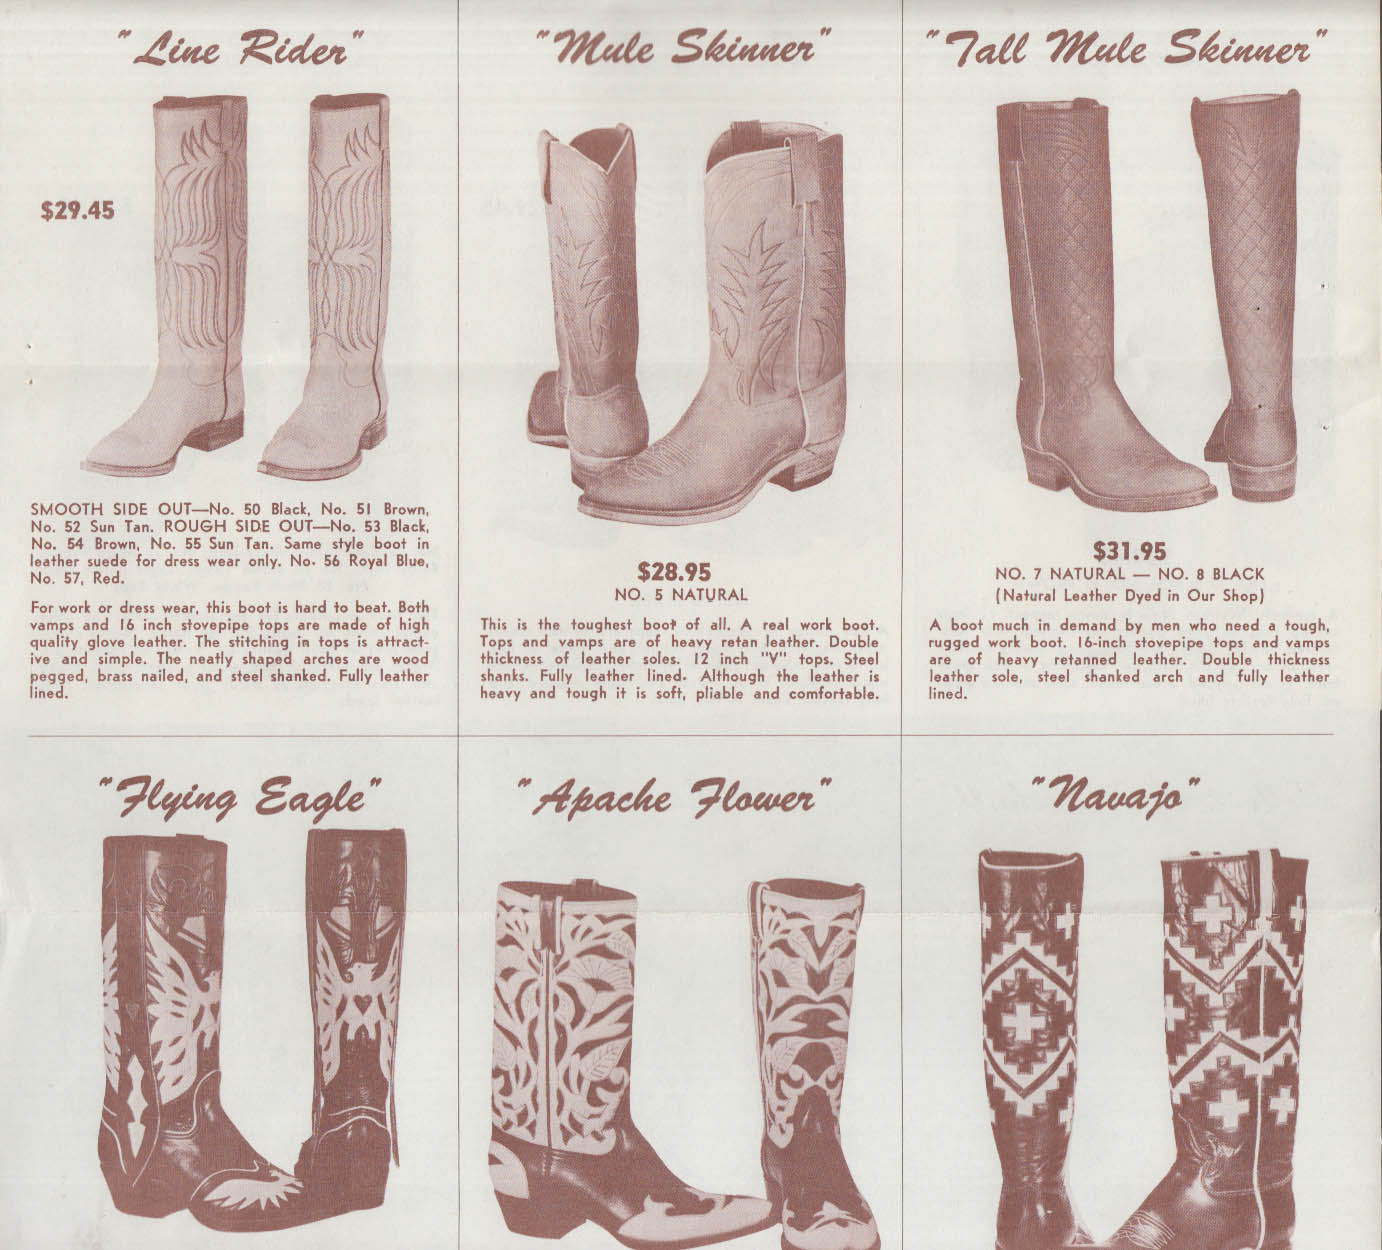 Hall Boot Company Joe Hall Boots El Paso TX mail order mailer 1960s